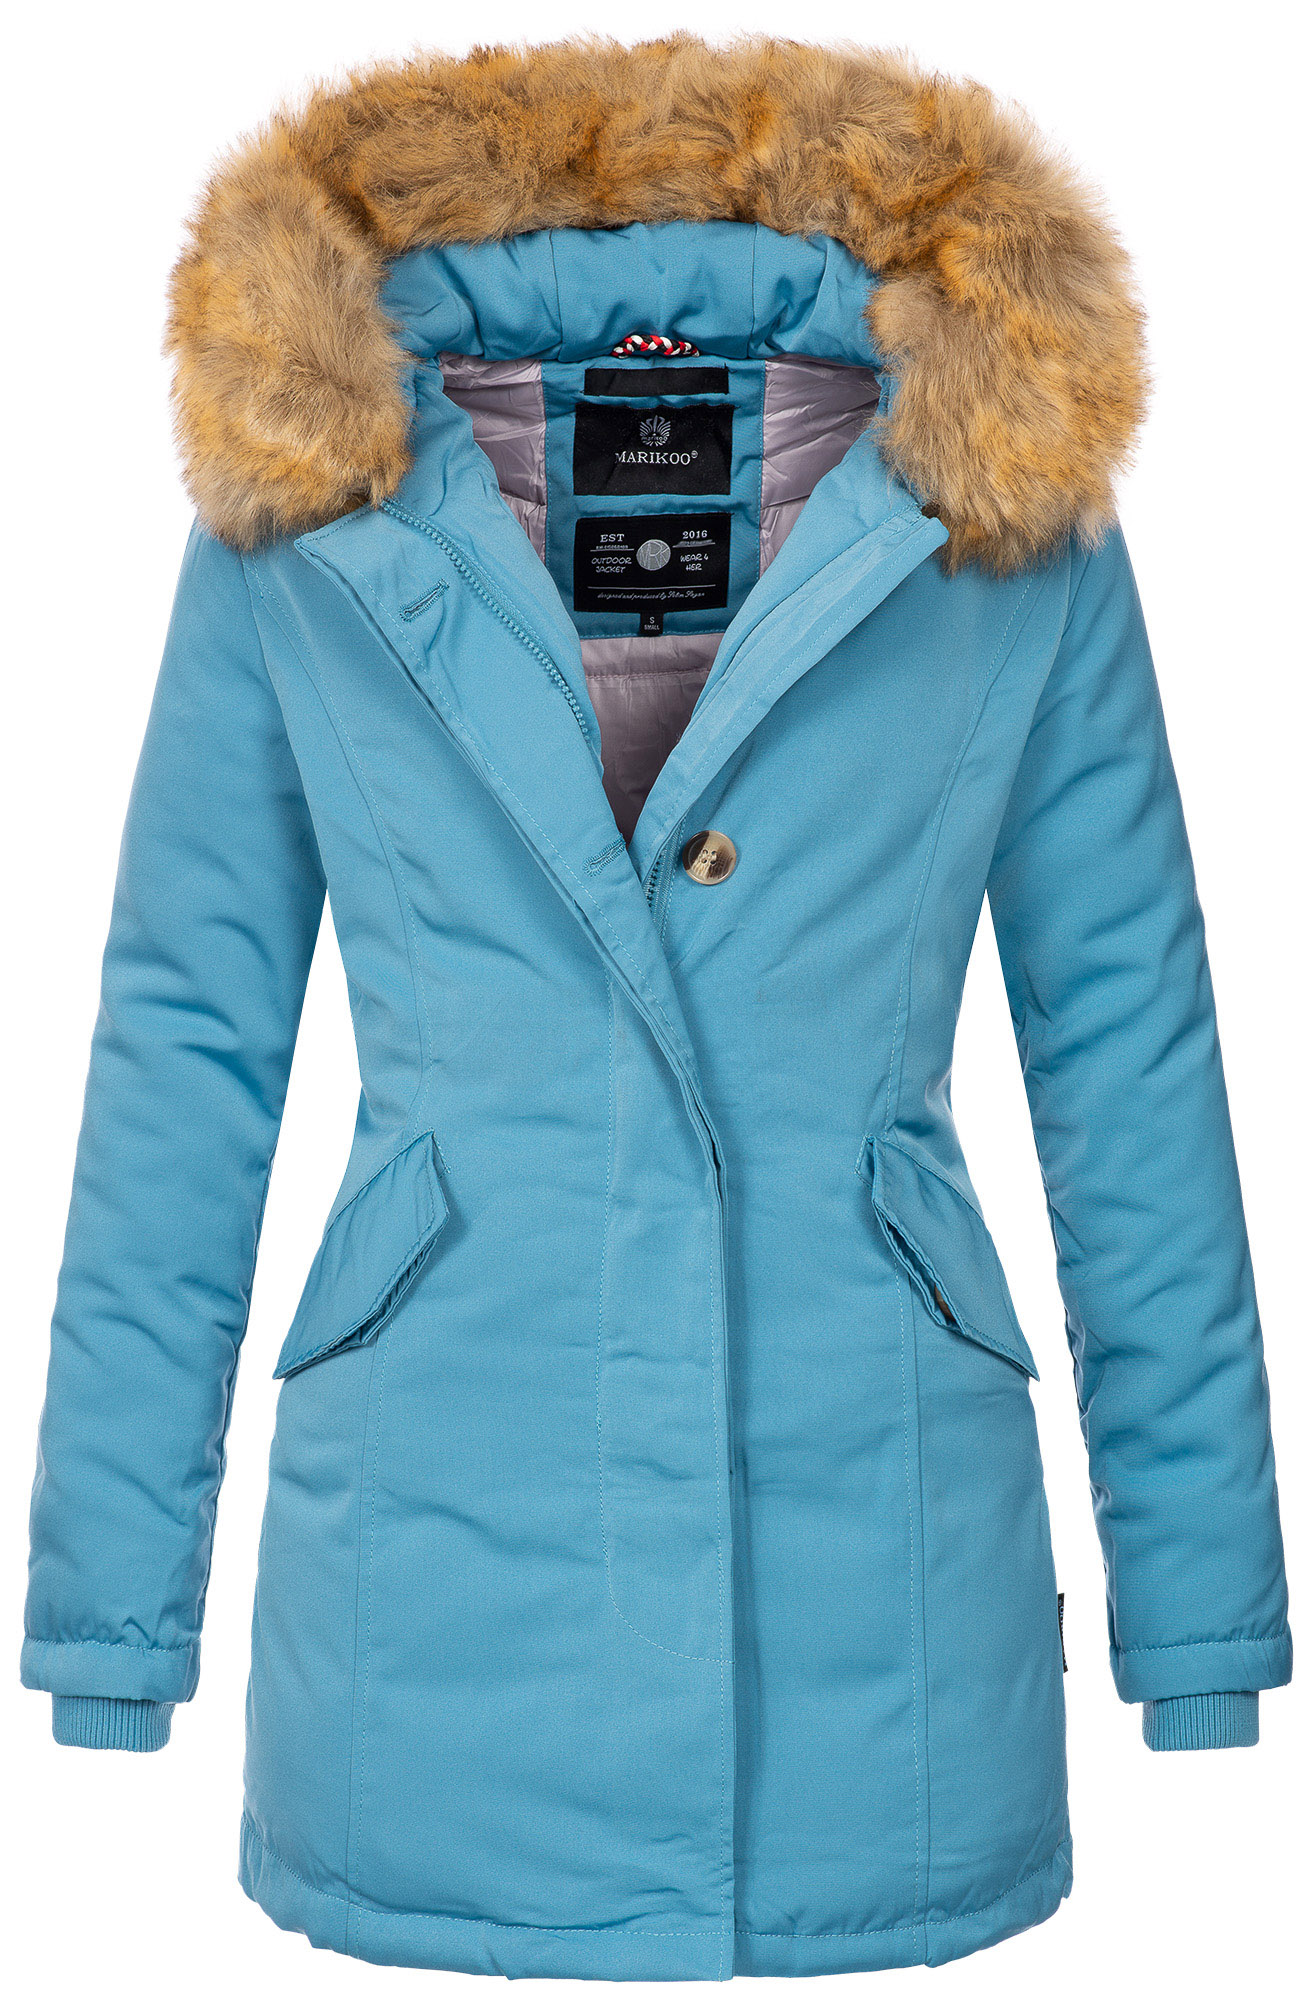 Ladies winter jacket coat coat winter jacket warm lining B